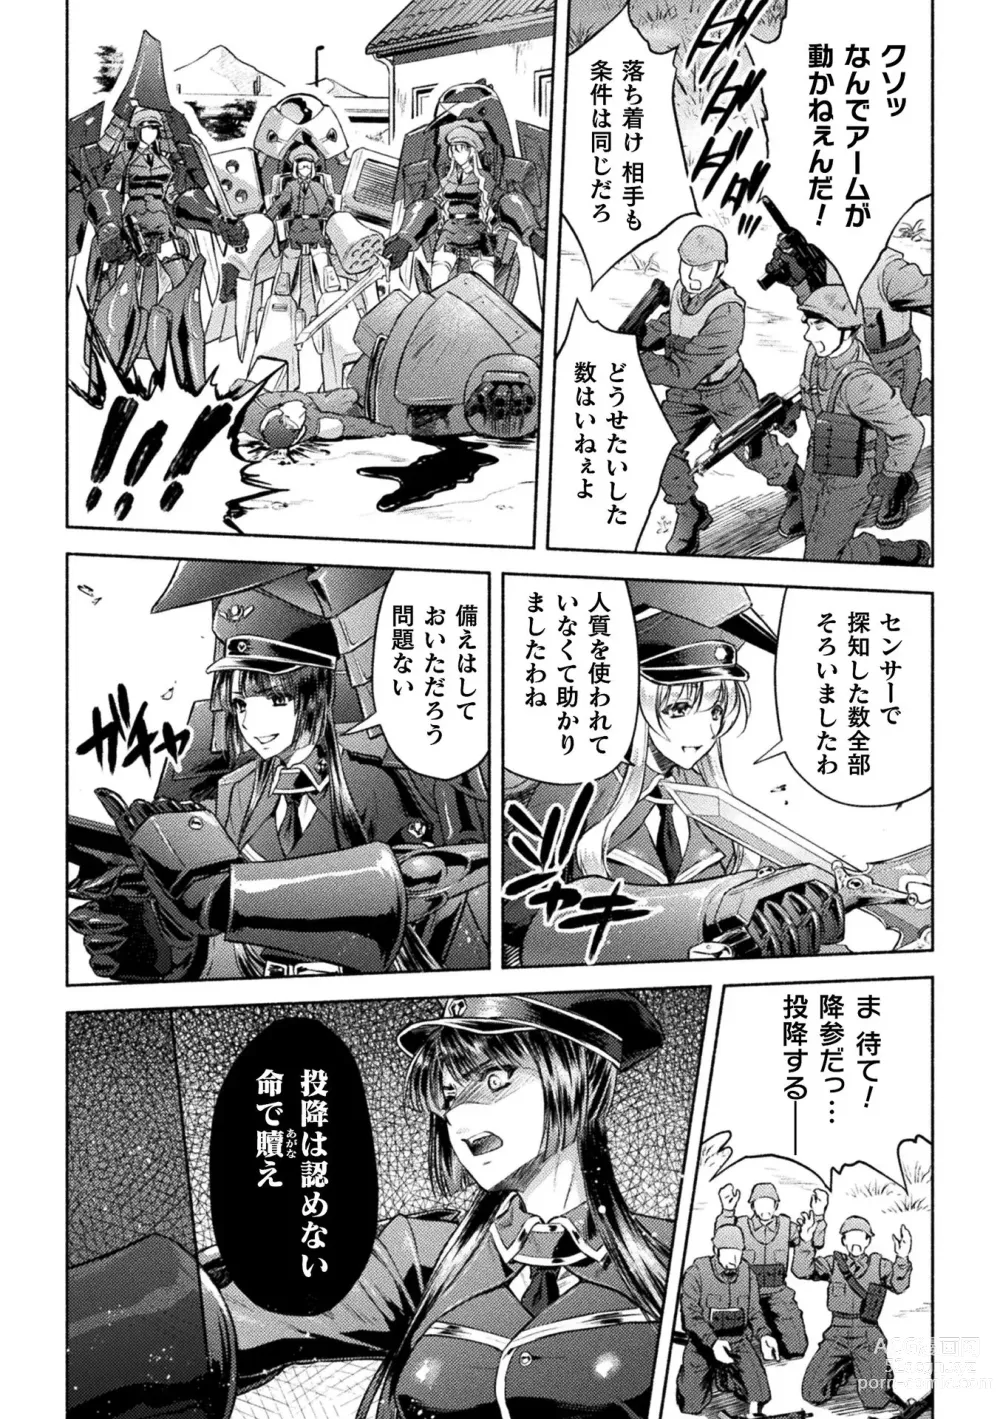 Page 7 of manga Kukkoro Heroines Vol. 34